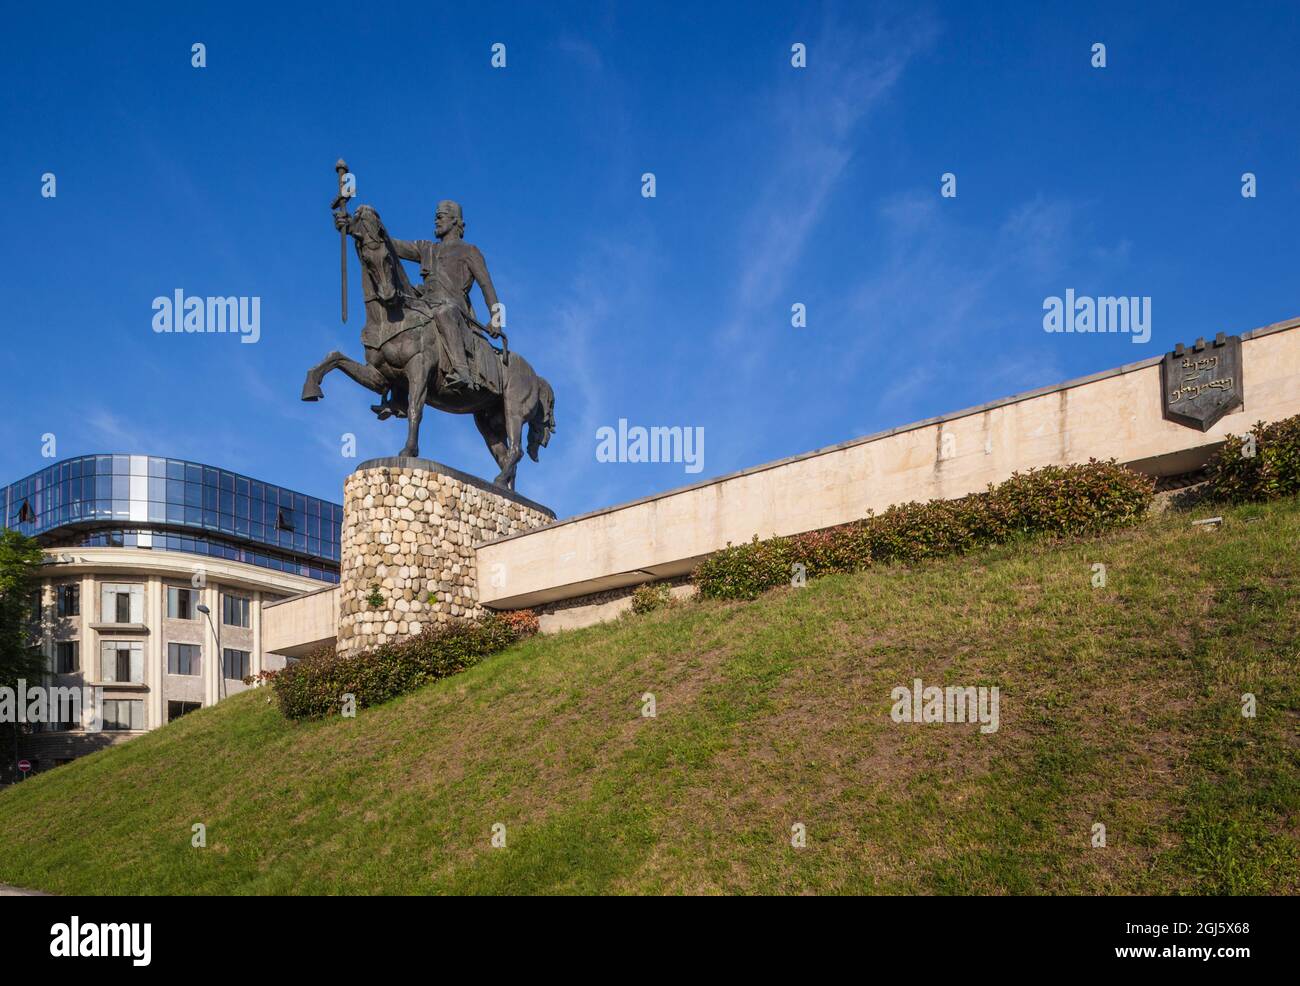 Georgia, Kakheti, Telavi. Statue of King Erekle II. Stock Photo